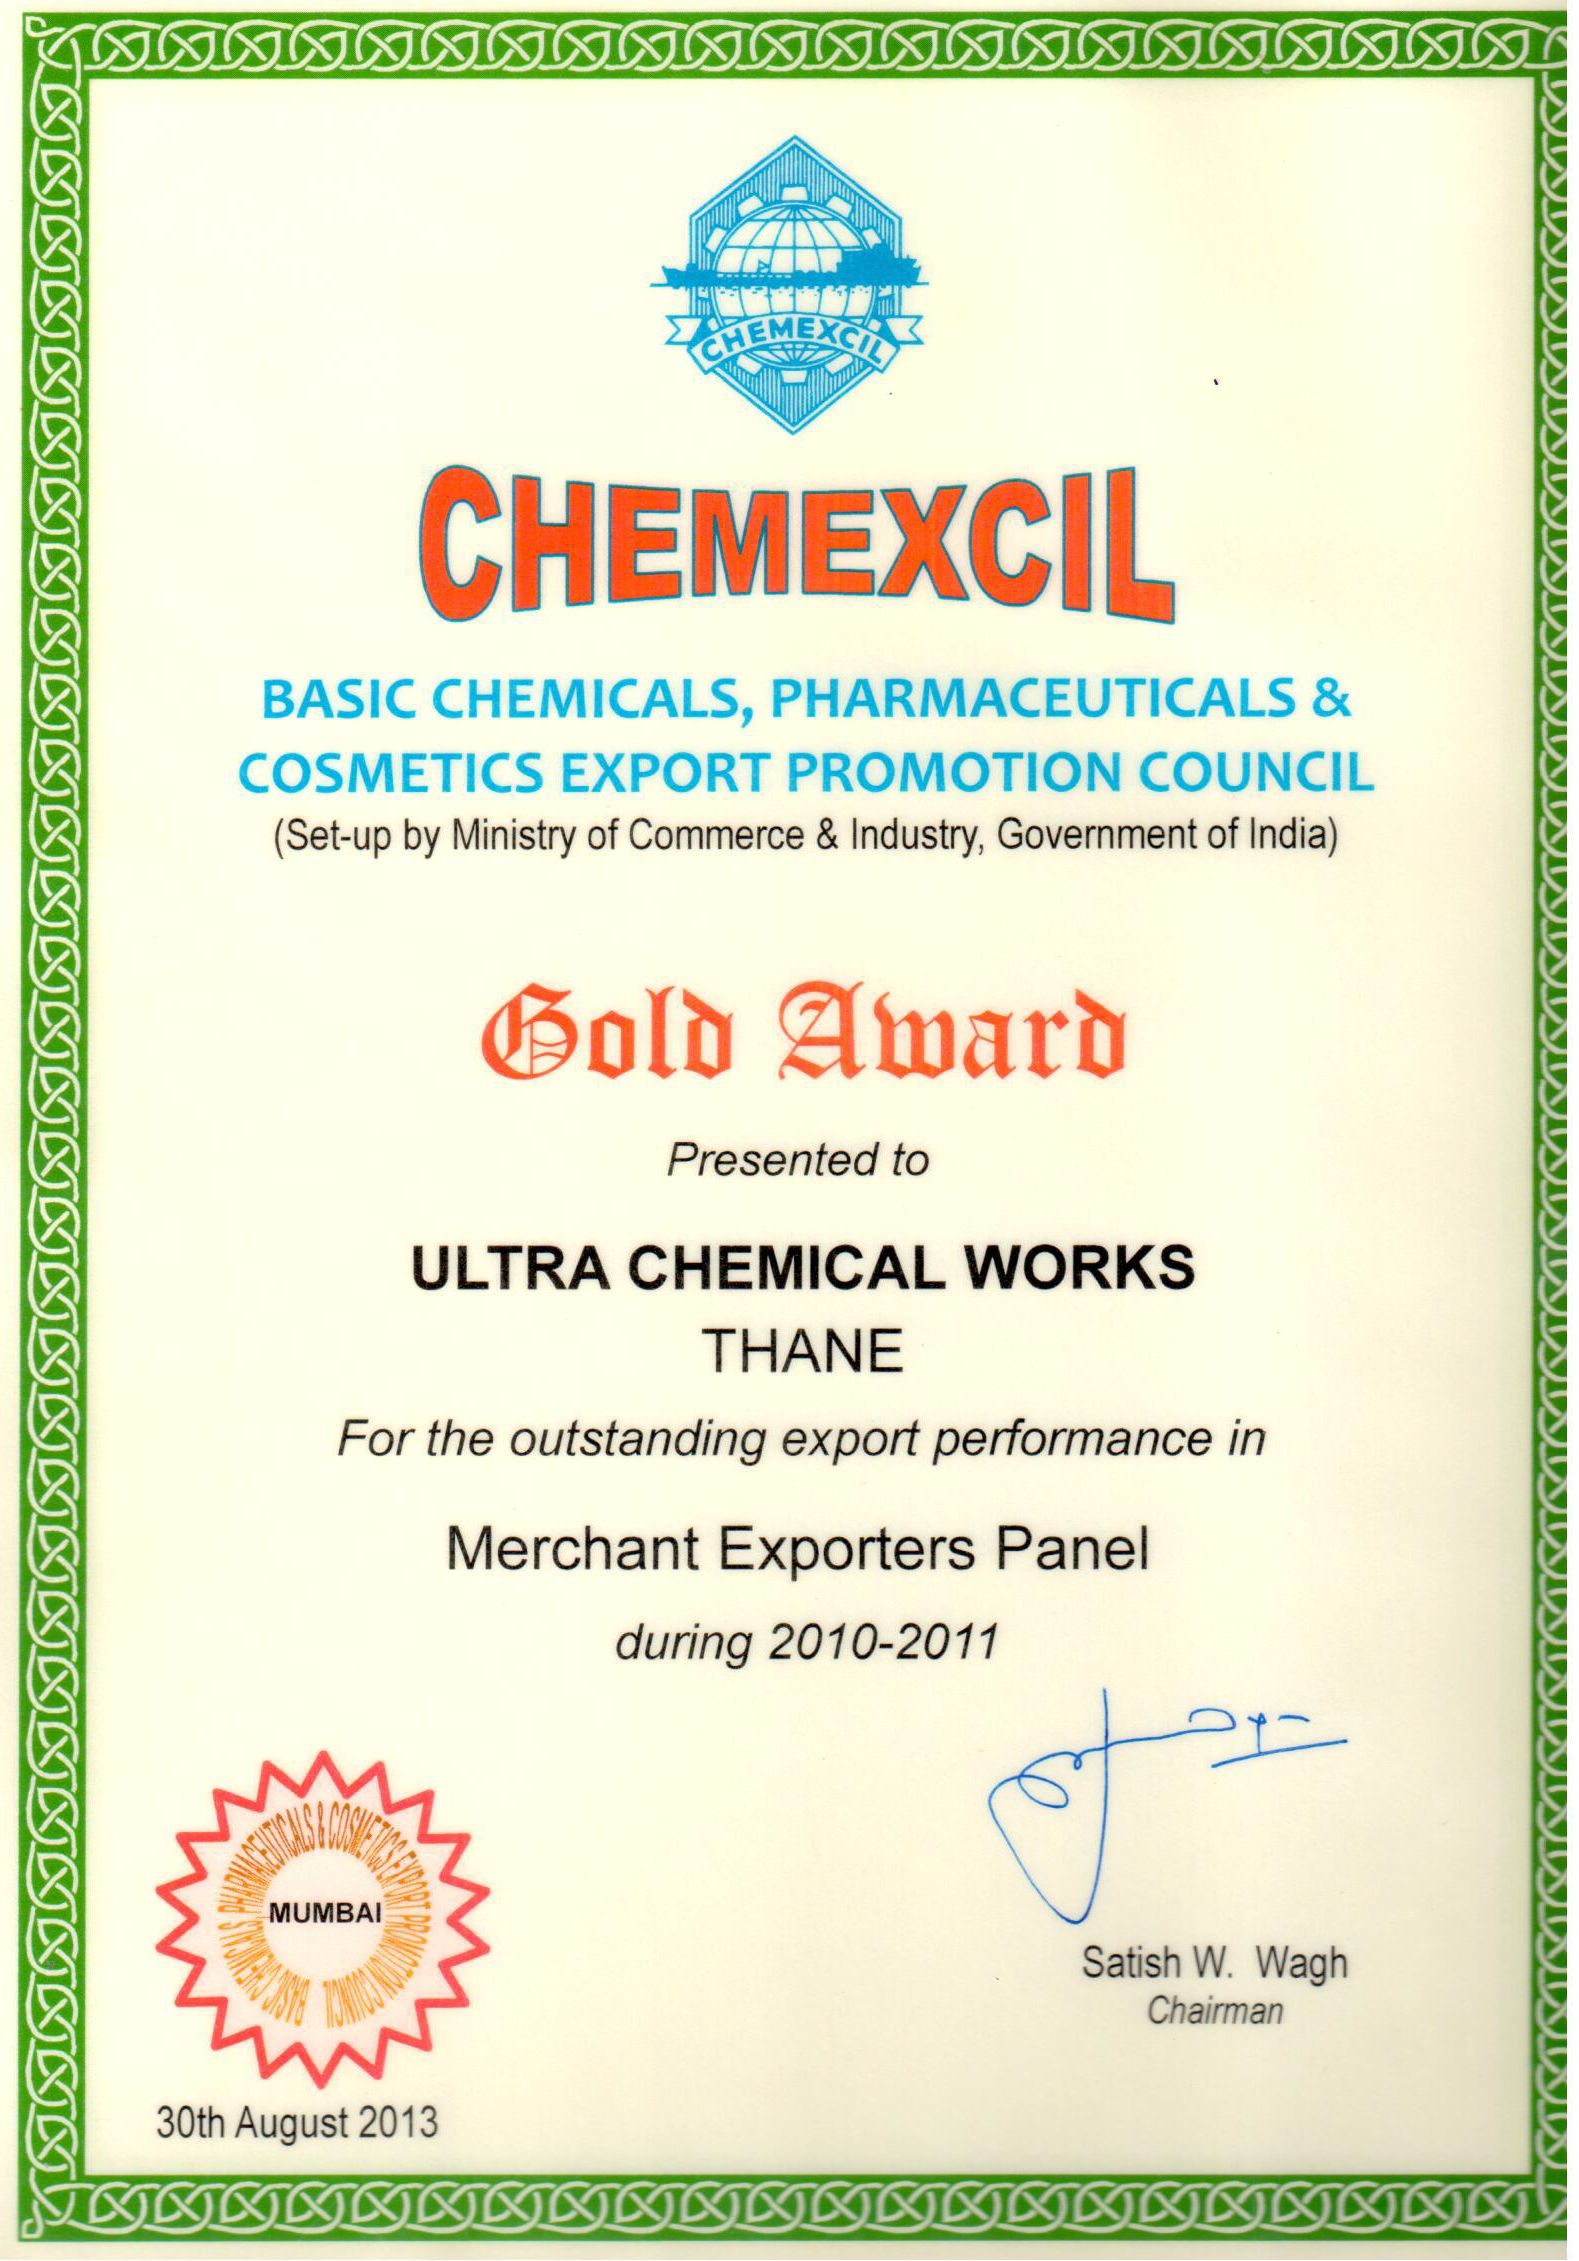 Chemexcil Award for 2010-2011